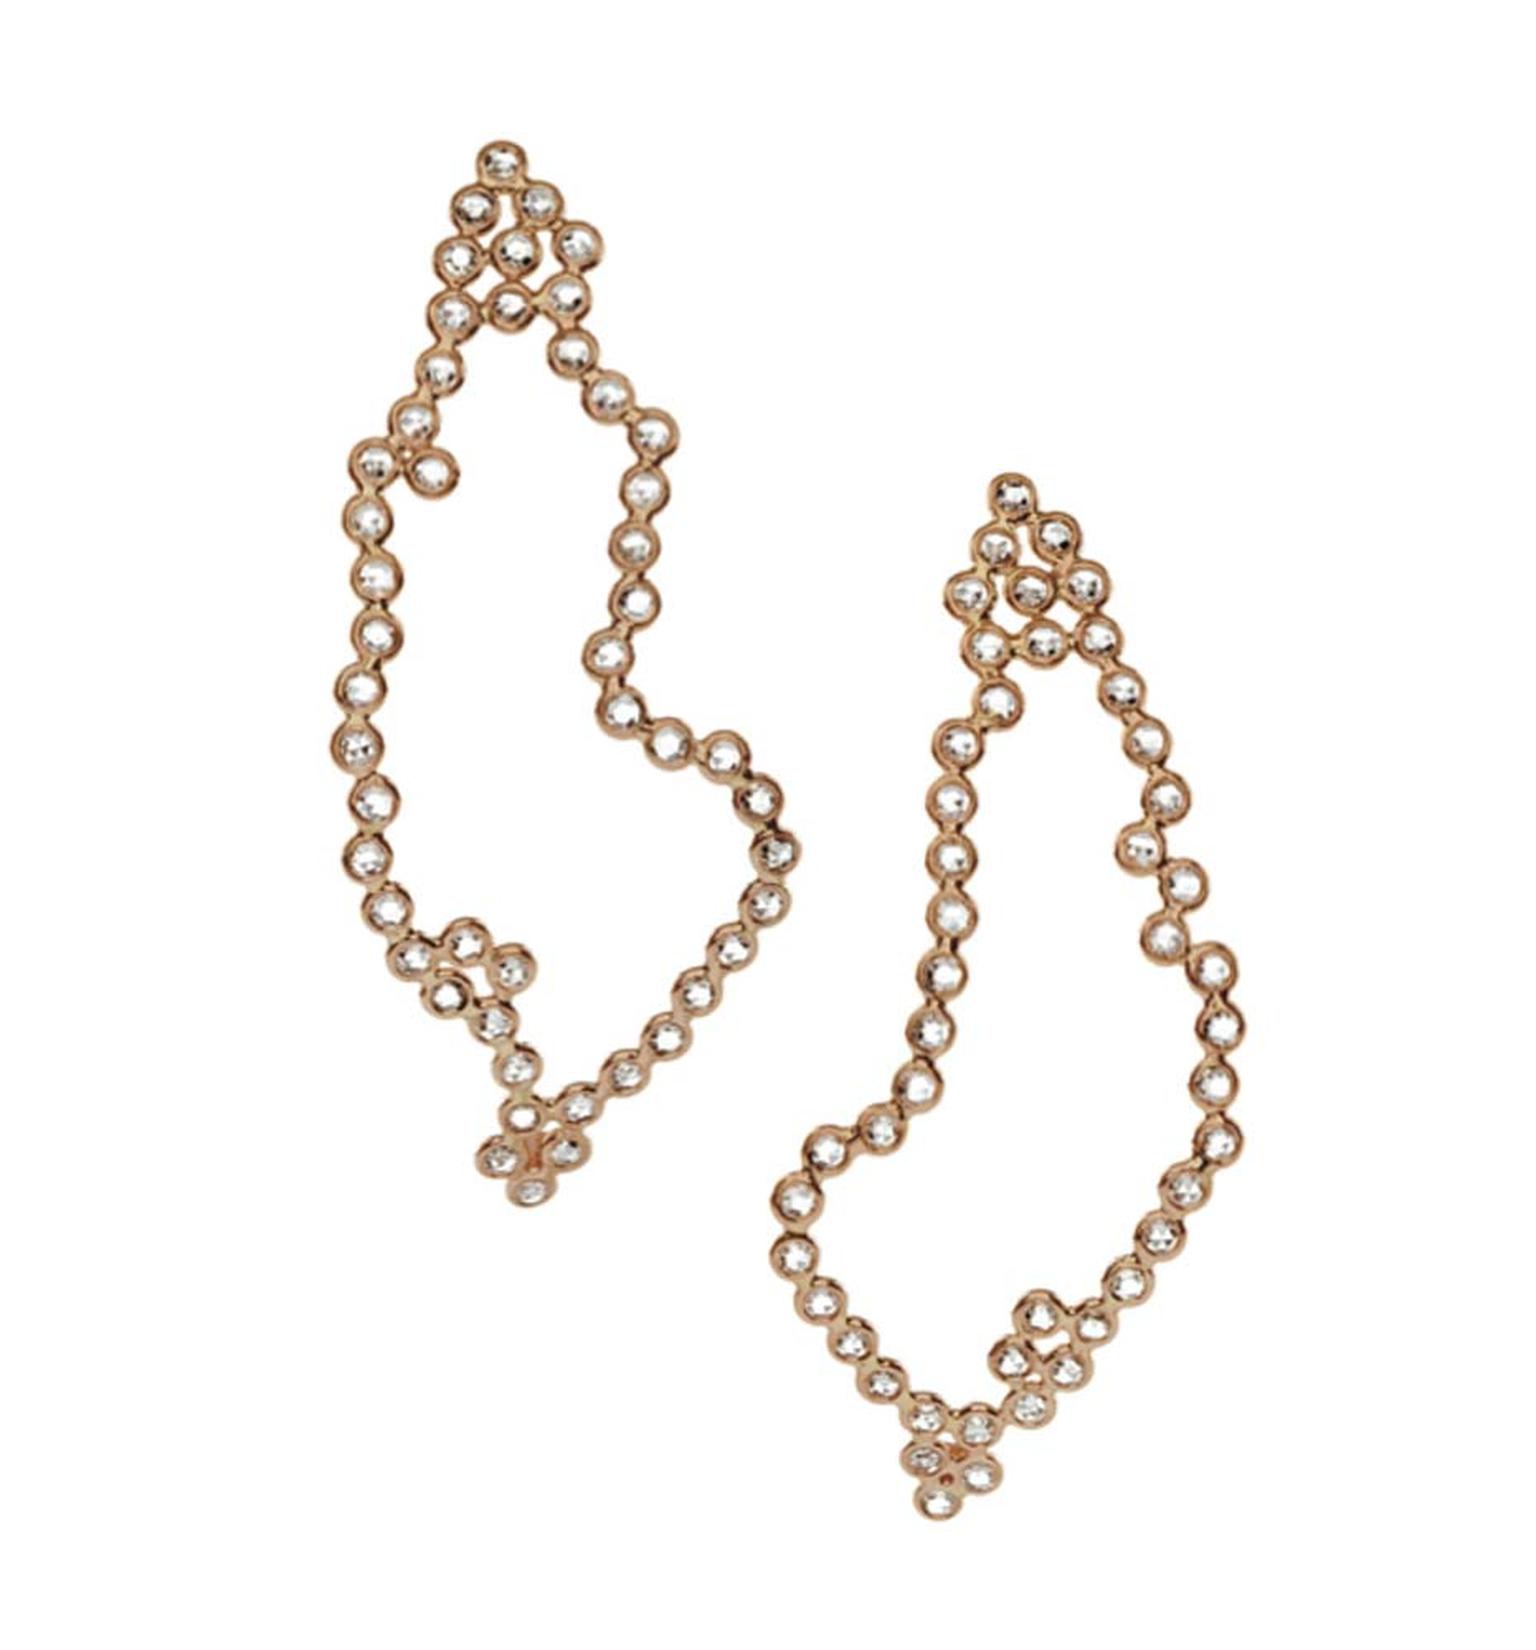 Lito Stalactite earrings featuring 96 rose-cut diamonds.